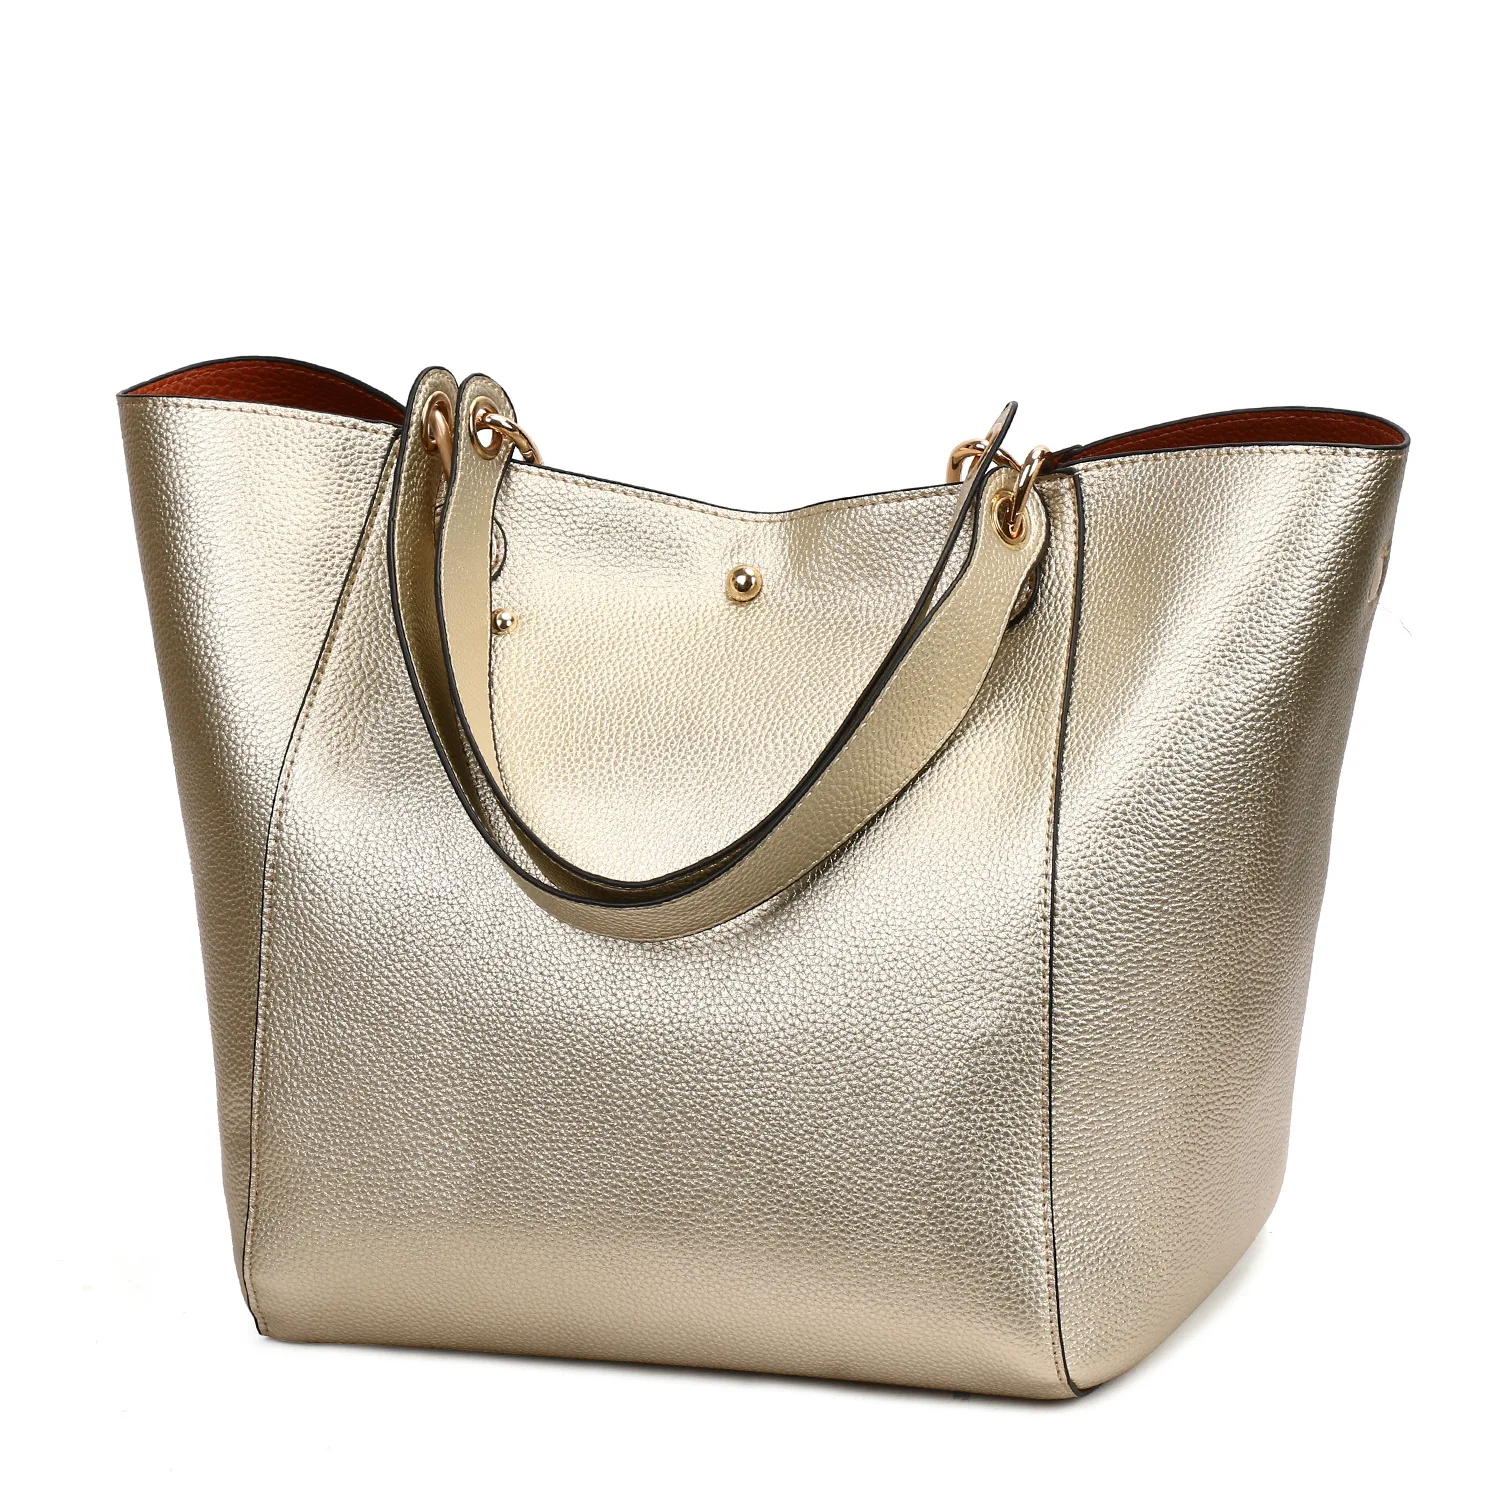 Leather Handbags Big Women Bag Female Bags Trunk Tote Shoulder Bag High Quality Casual Ladies Large Bolsos 2pcs/set Fashion Soft images - 6